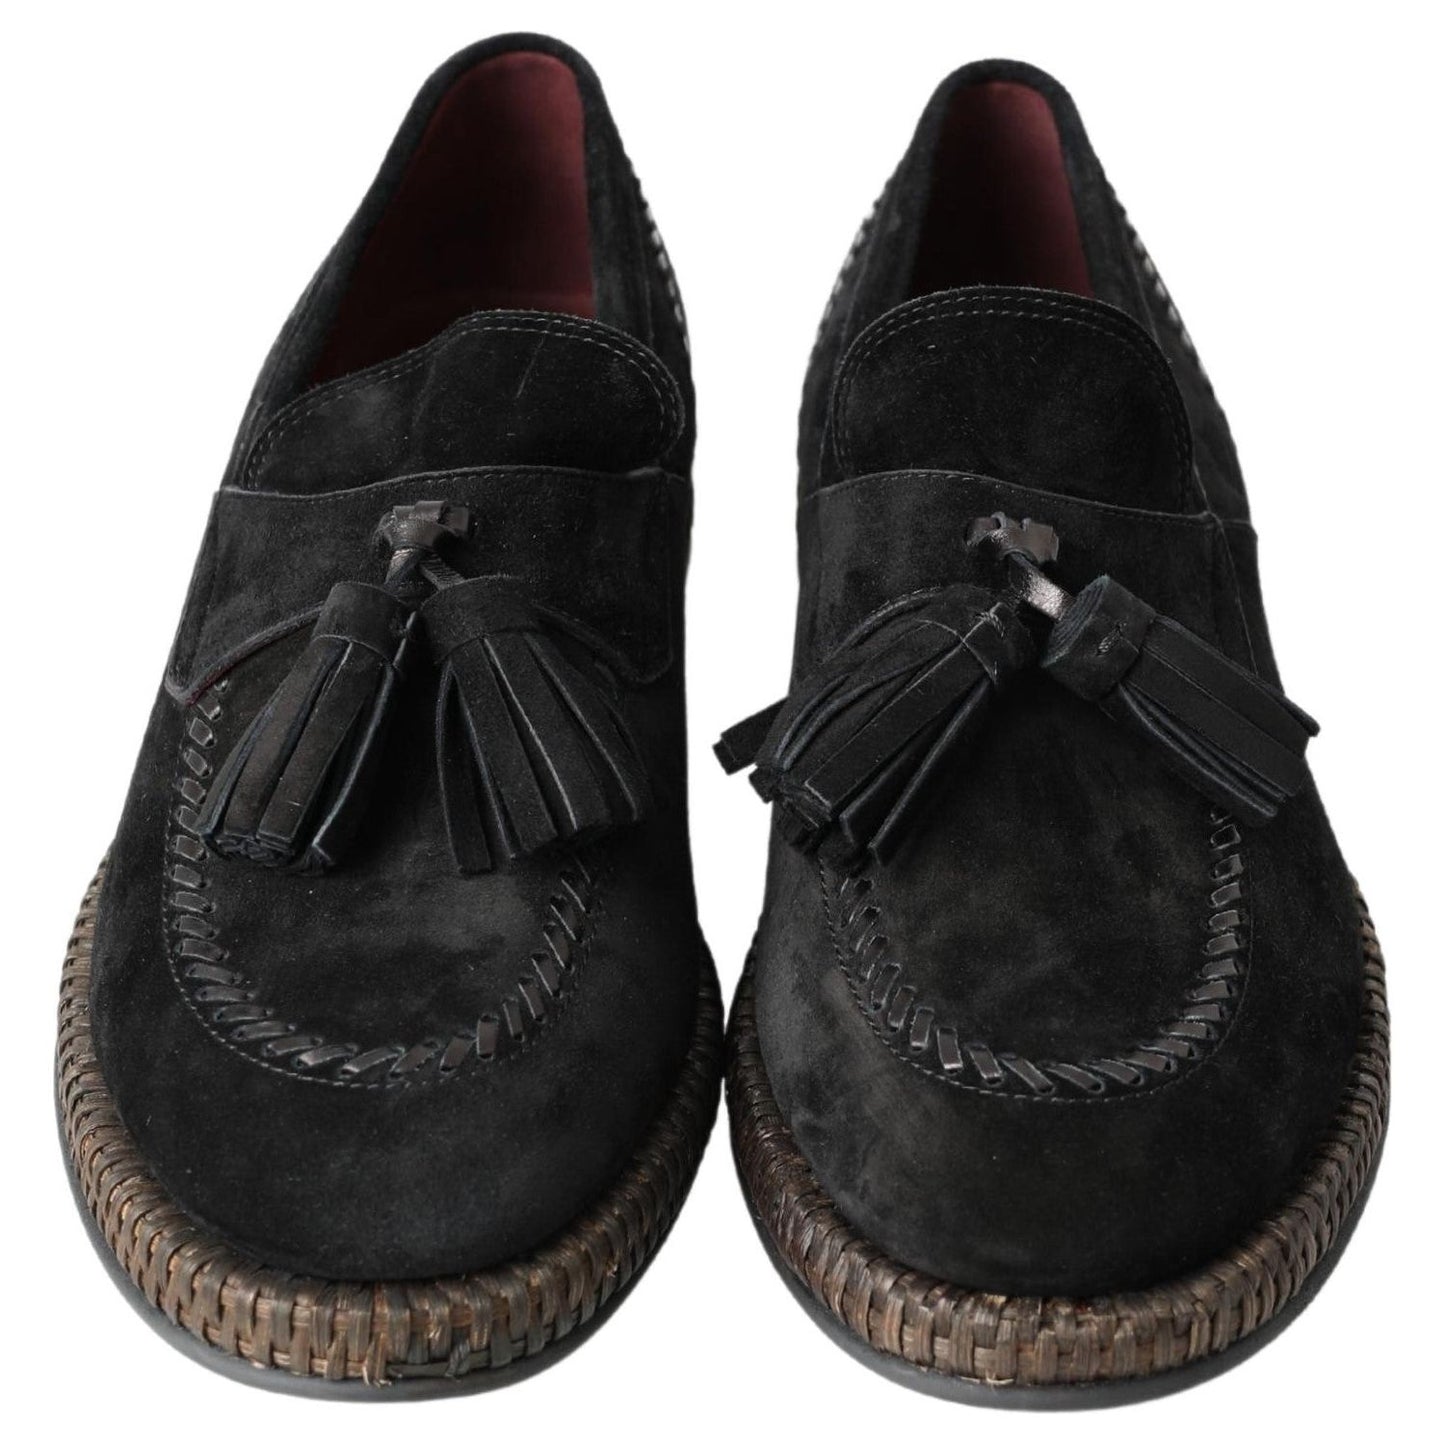 Dolce & Gabbana Elegant Black Suede Espadrilles Sneakers black-suede-leather-casual-espadrille-shoes